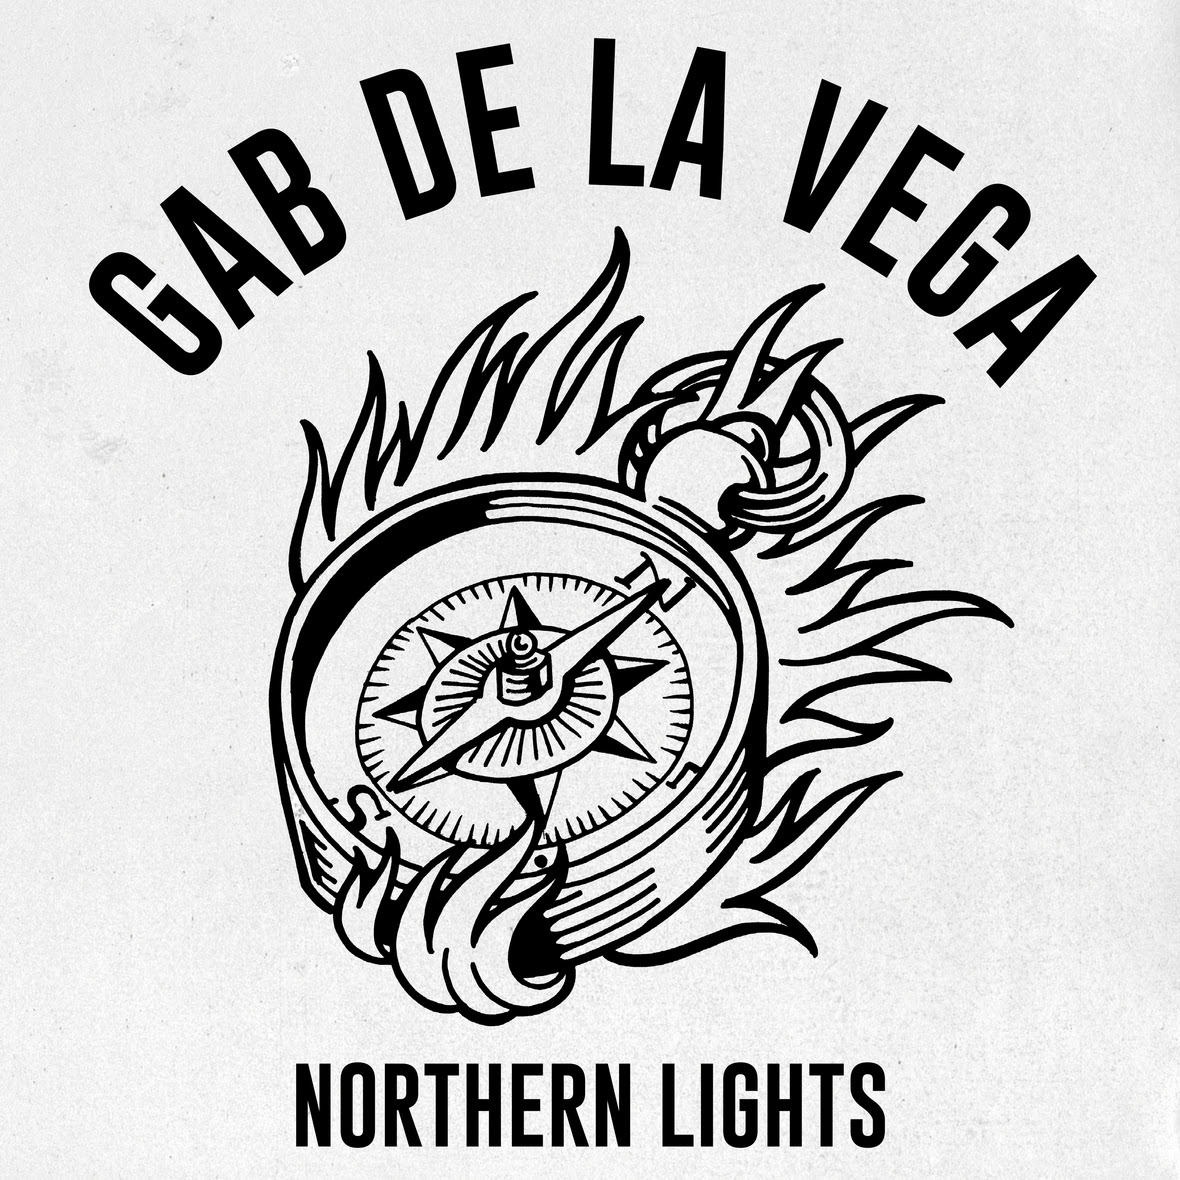 Gab De La Vega - Northern Lights - Single Cover - Final